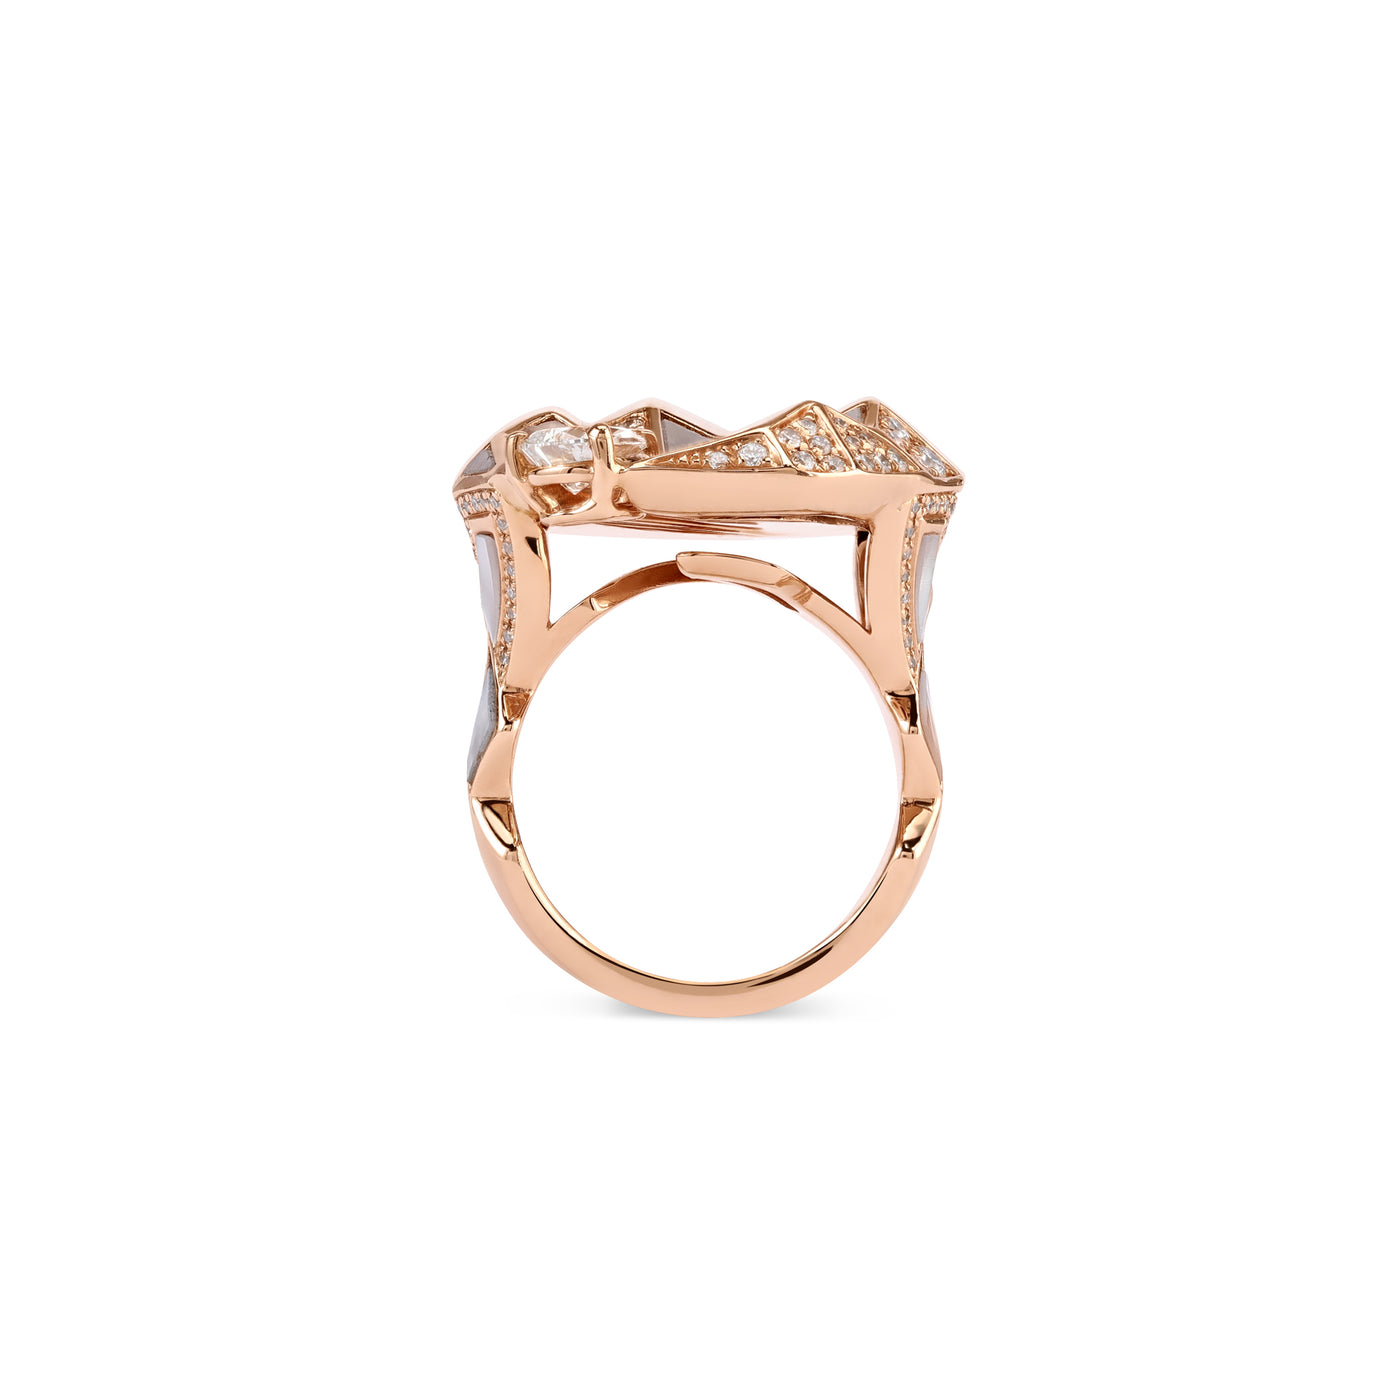 VISTA Geomatric Rose Gold Diamond Ring With Mop